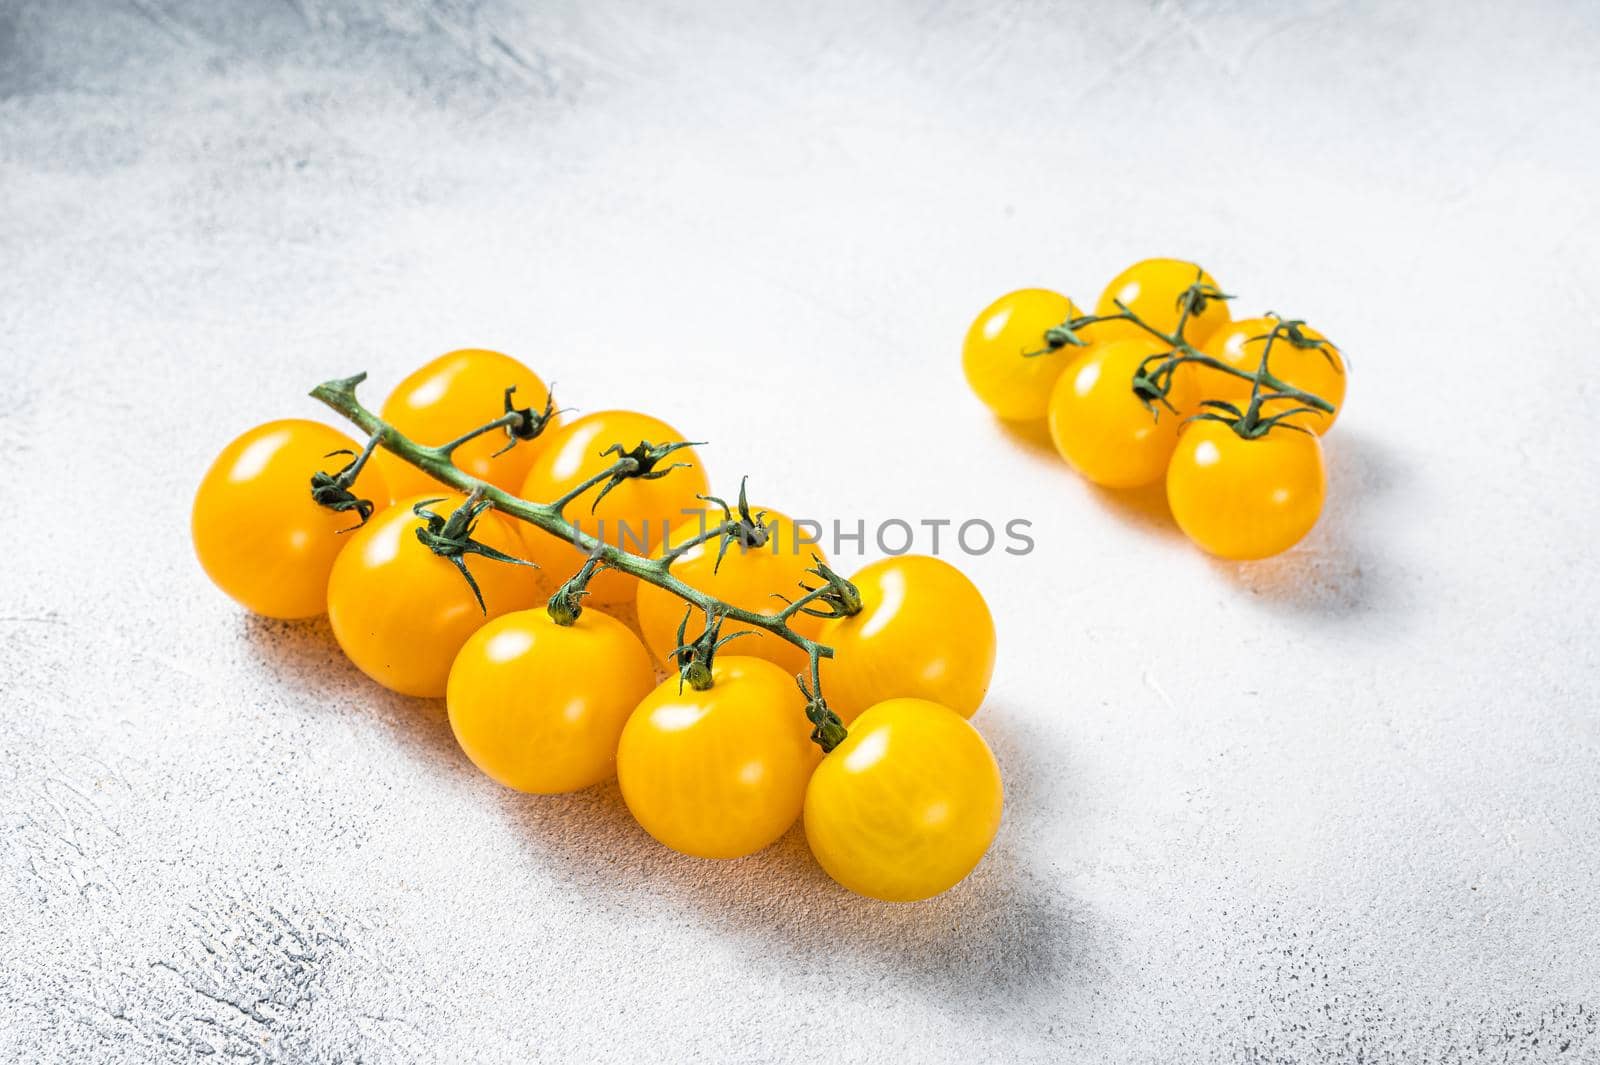 Small yellow cherry tomato on a kitchen table. White background. Top view.